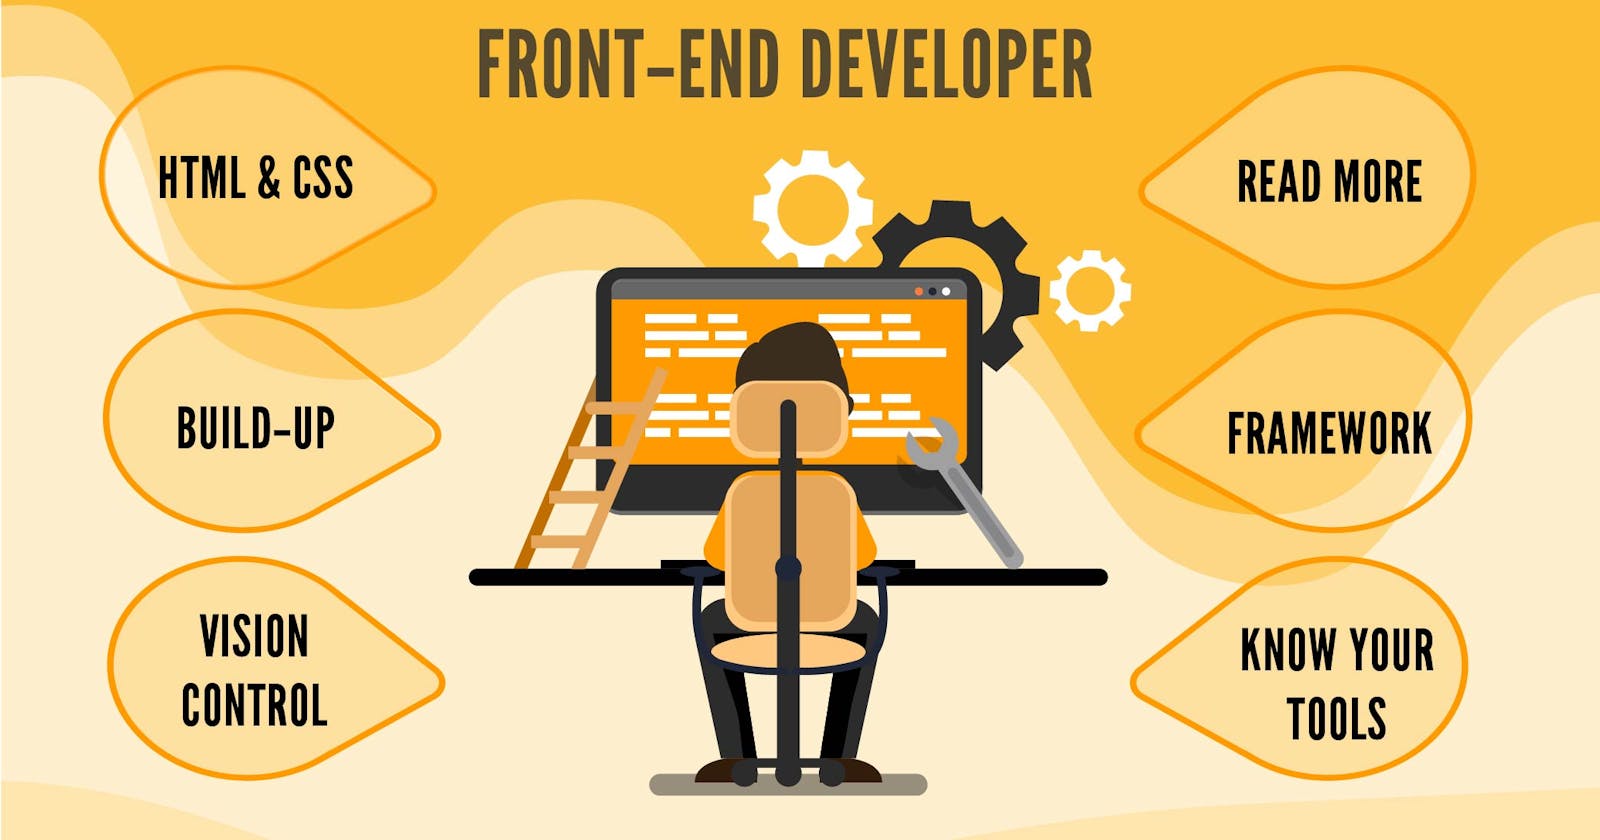 Skills Every Frontend Developer Needs